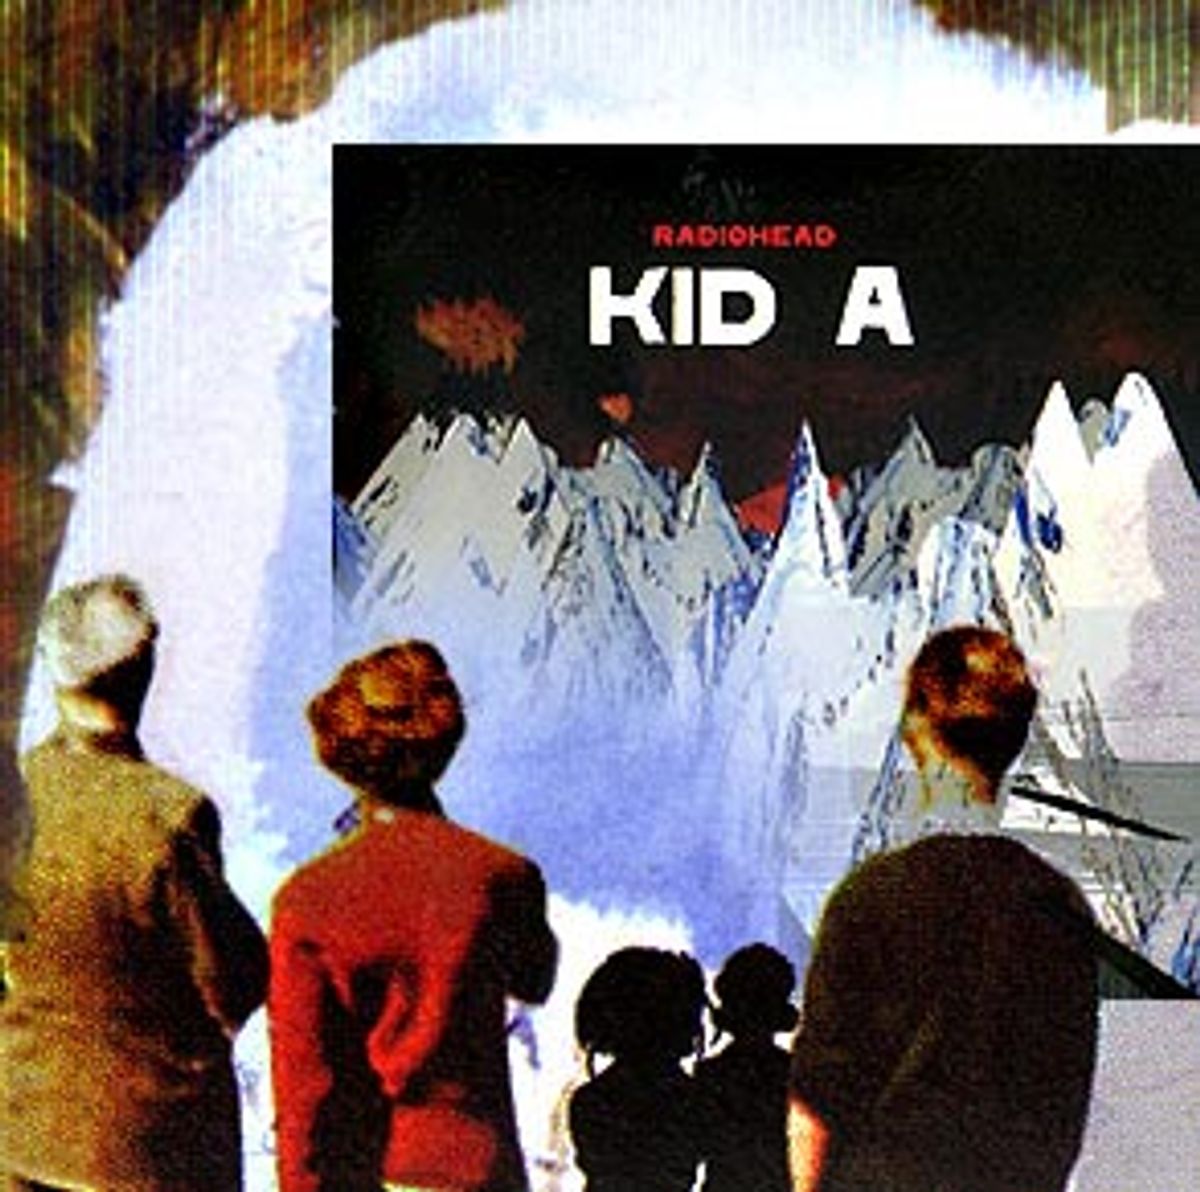 Kid A Album Cover